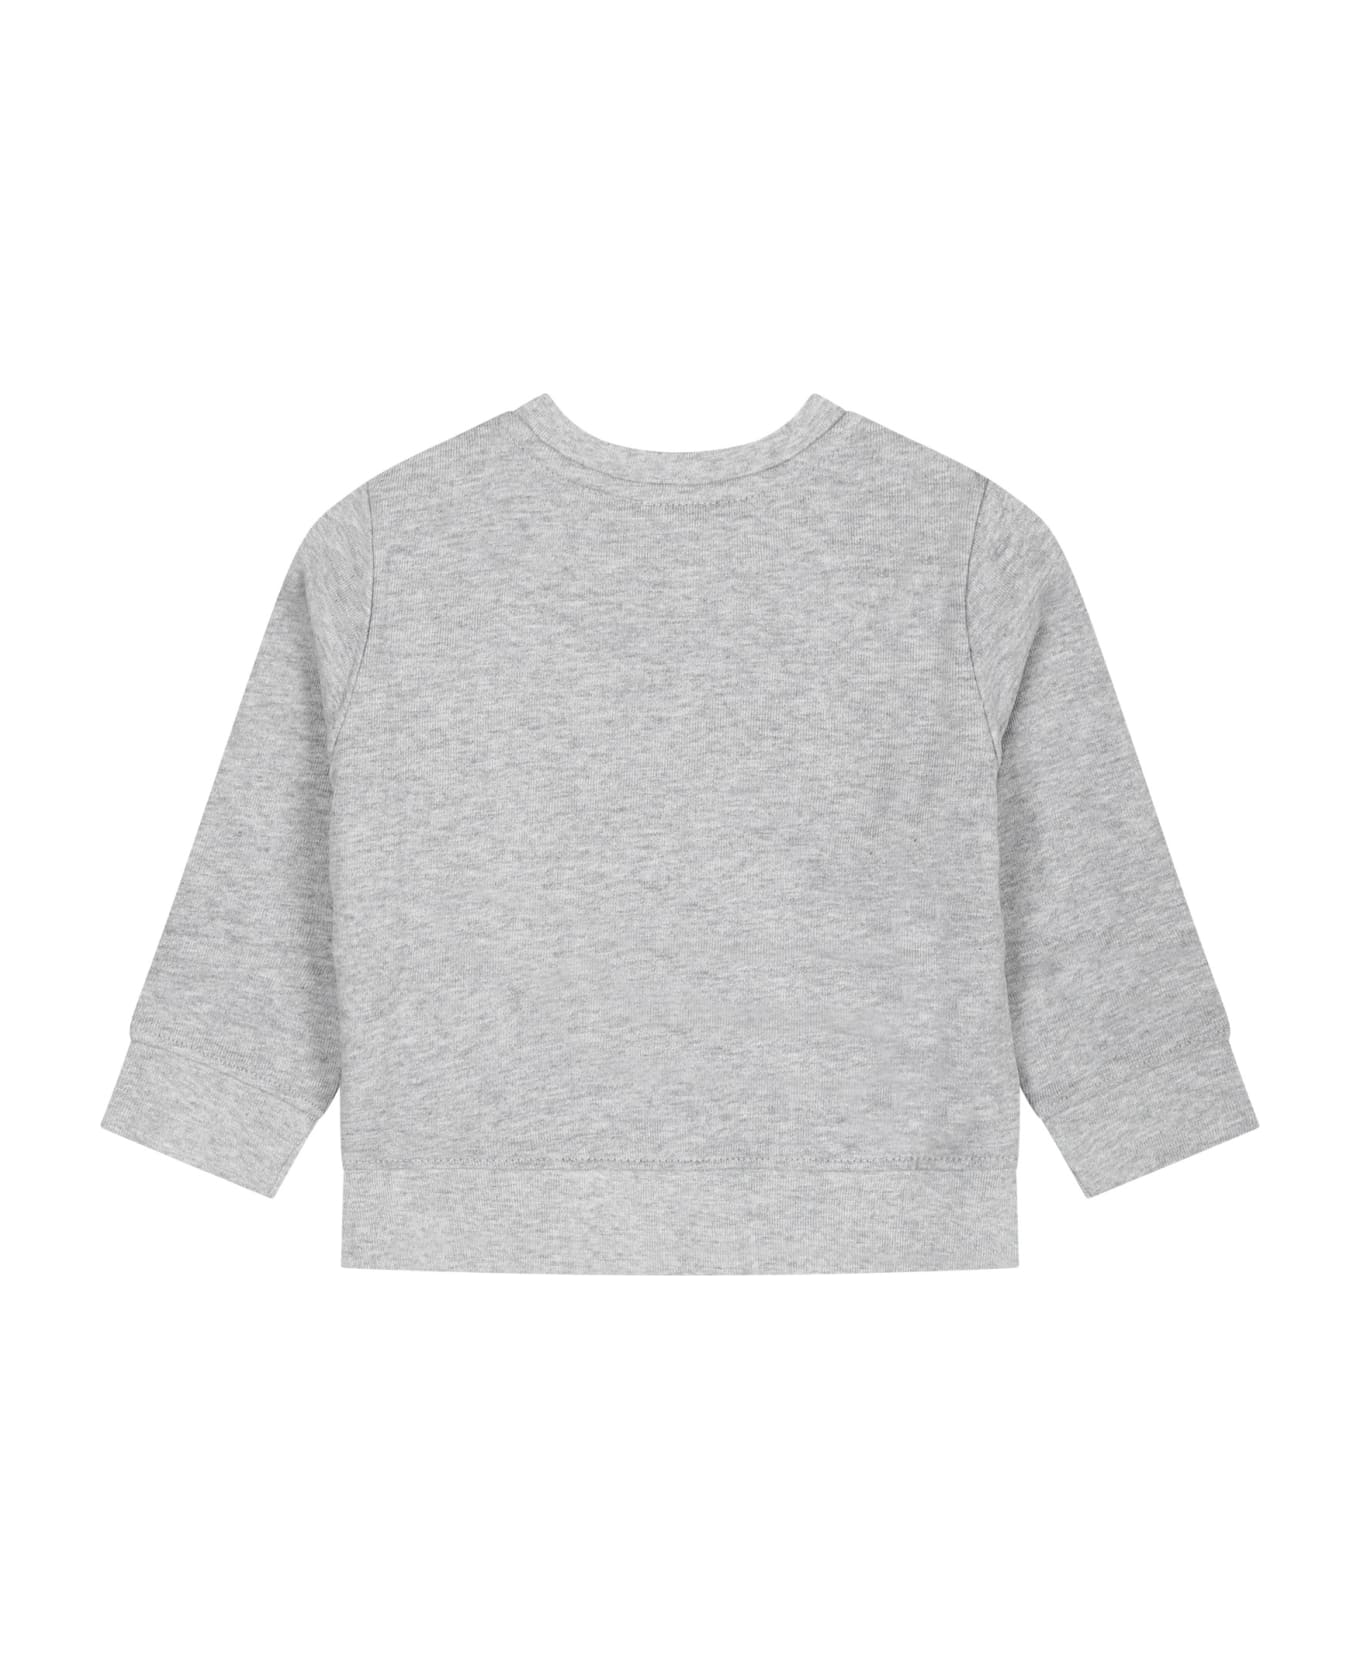 Stella McCartney Gray Sweatshirt For Baby Boy With Shark Print - Grigio